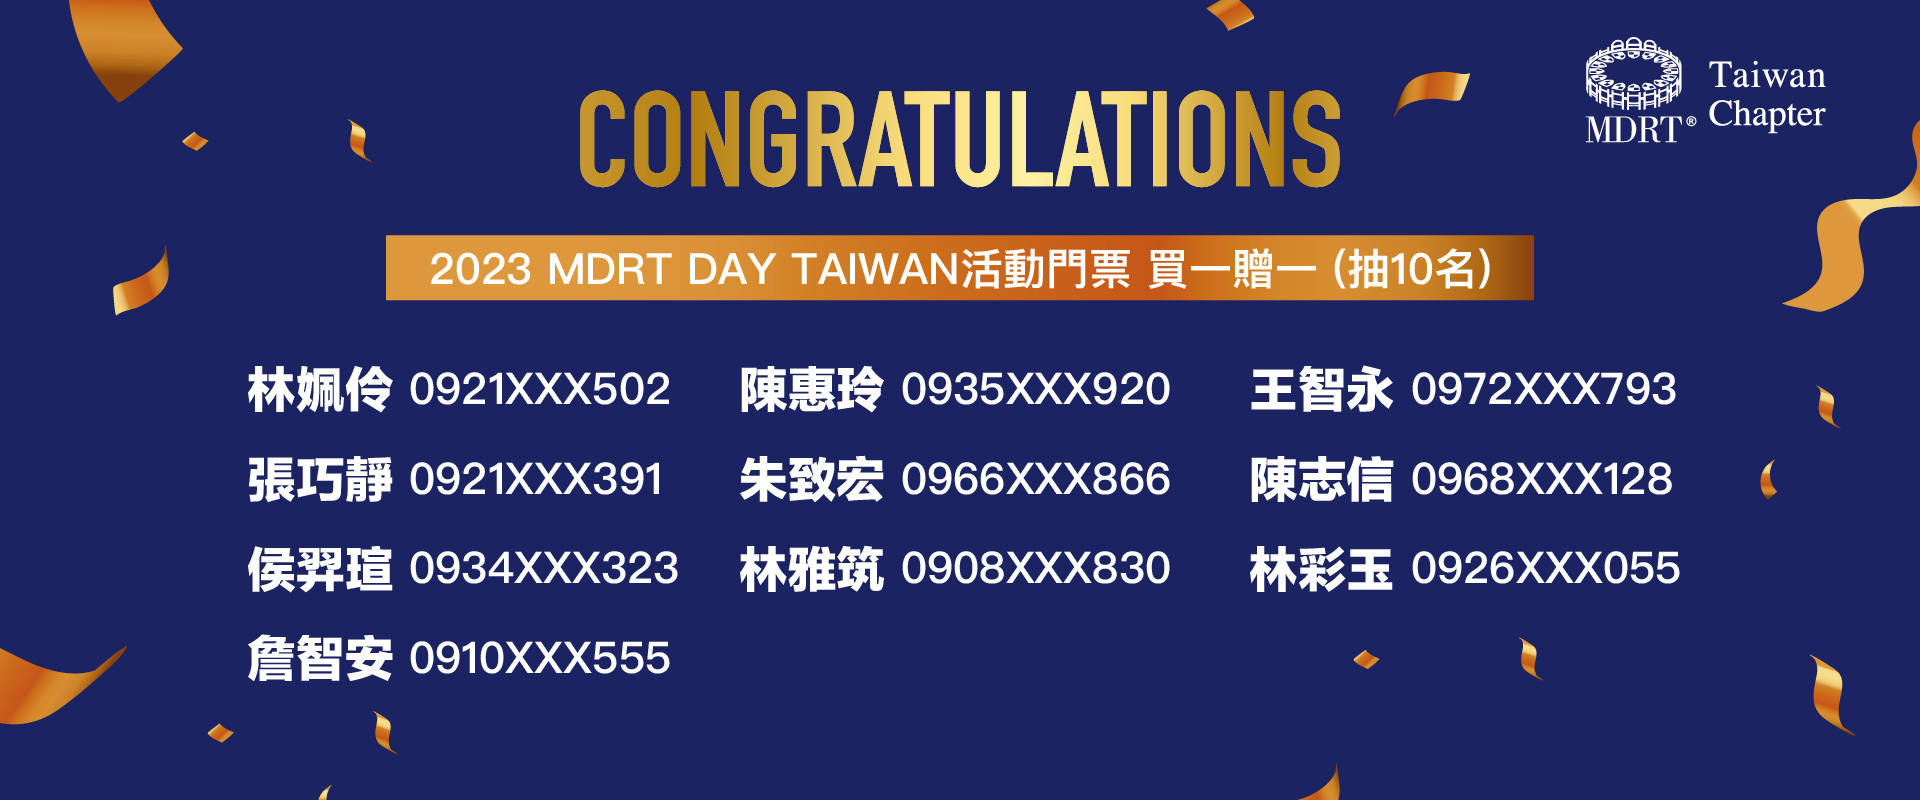 2023 MDRT DAY TAIWAN得獎名單